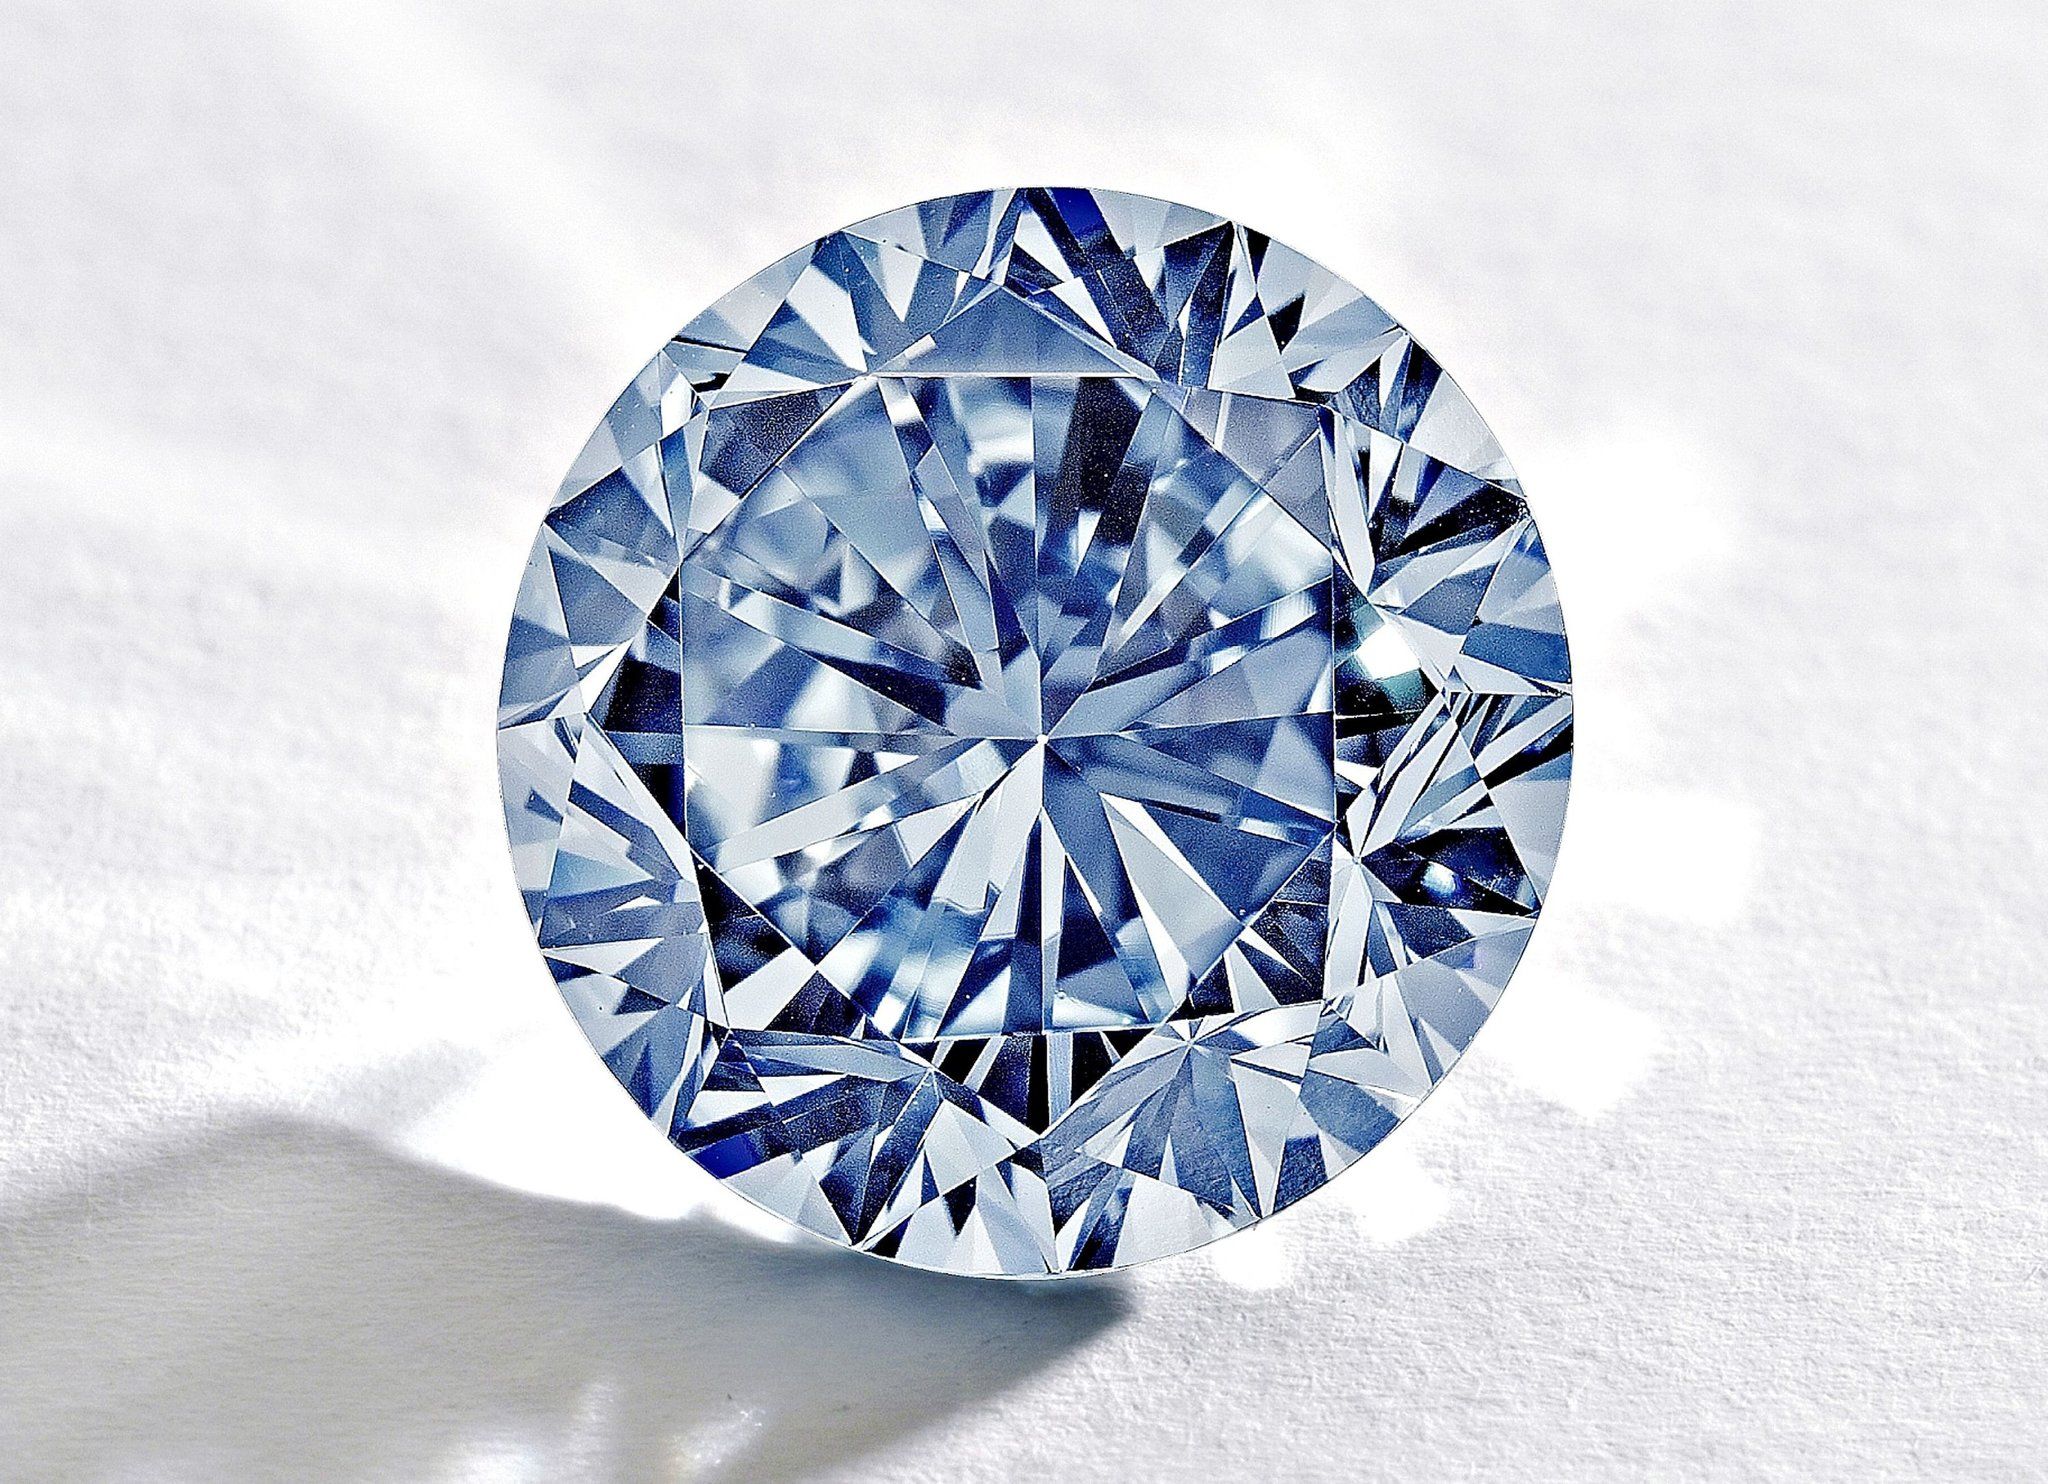 Sotheby's to Auction Rare Blue Diamond